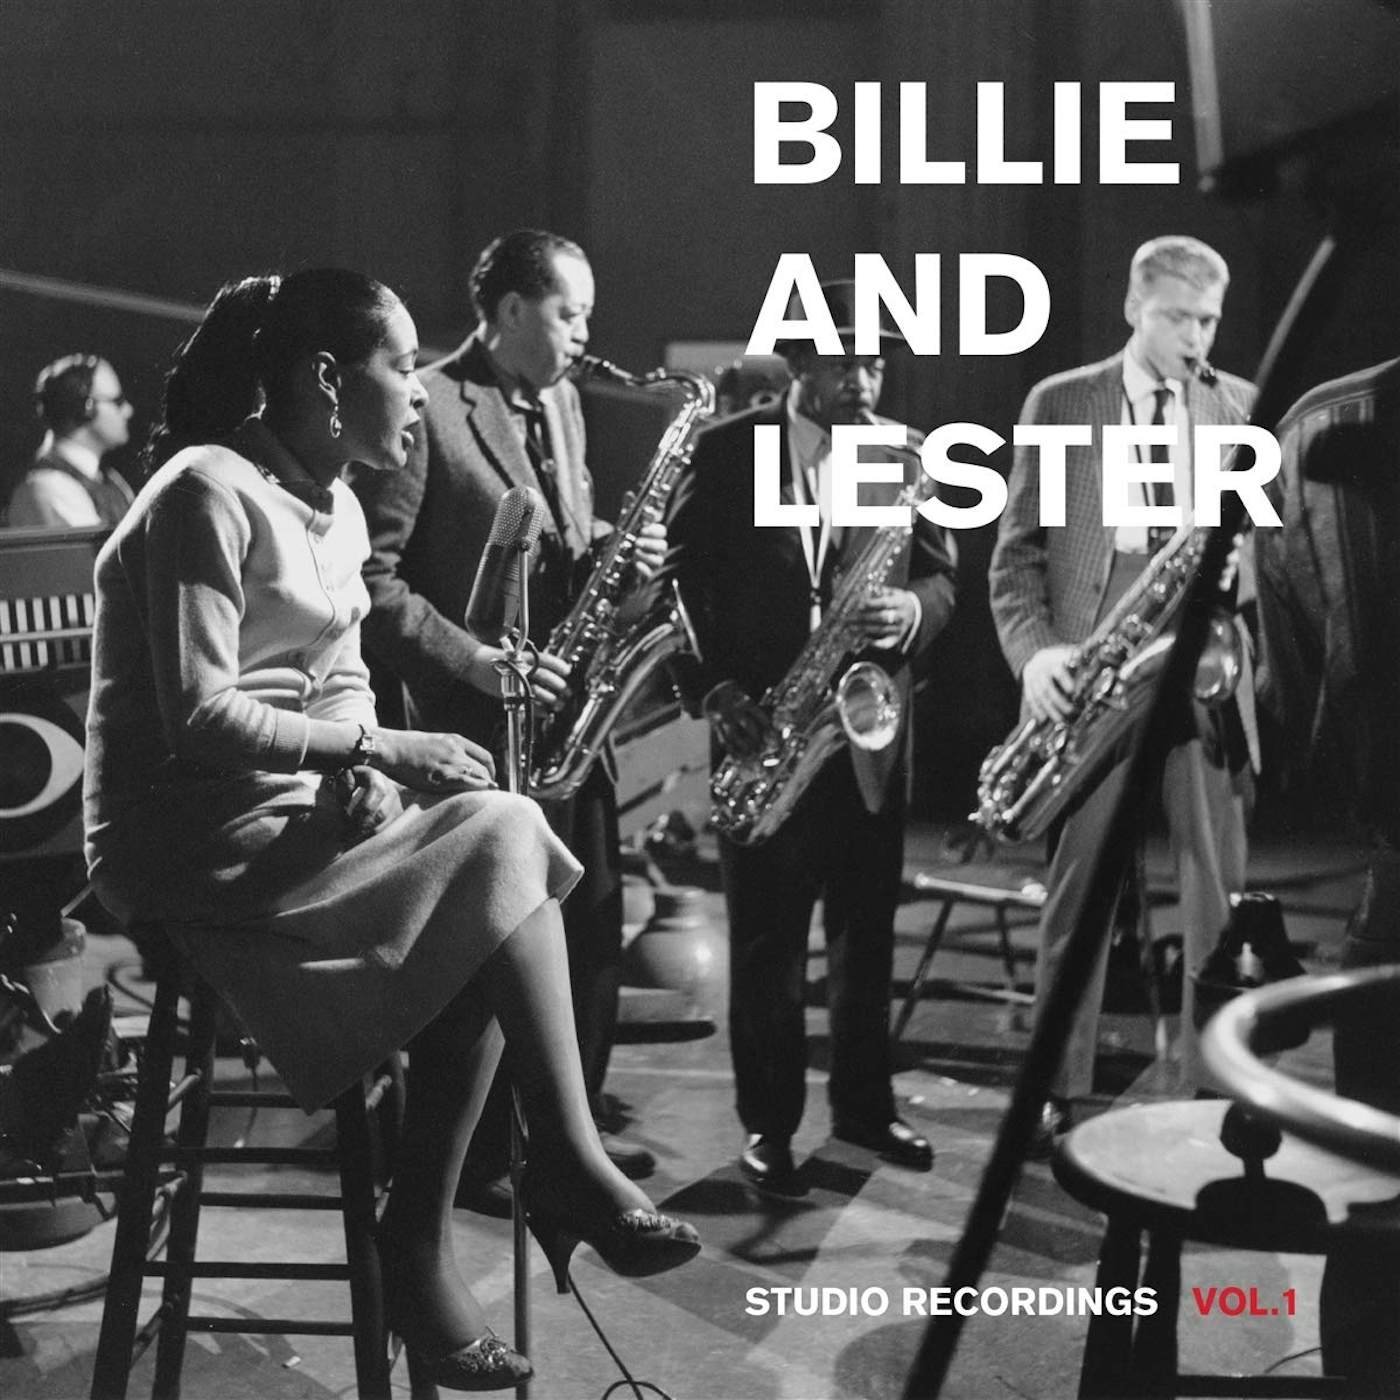 Billie And Lester Studio Recordings Vol. 1 Vinyl Record